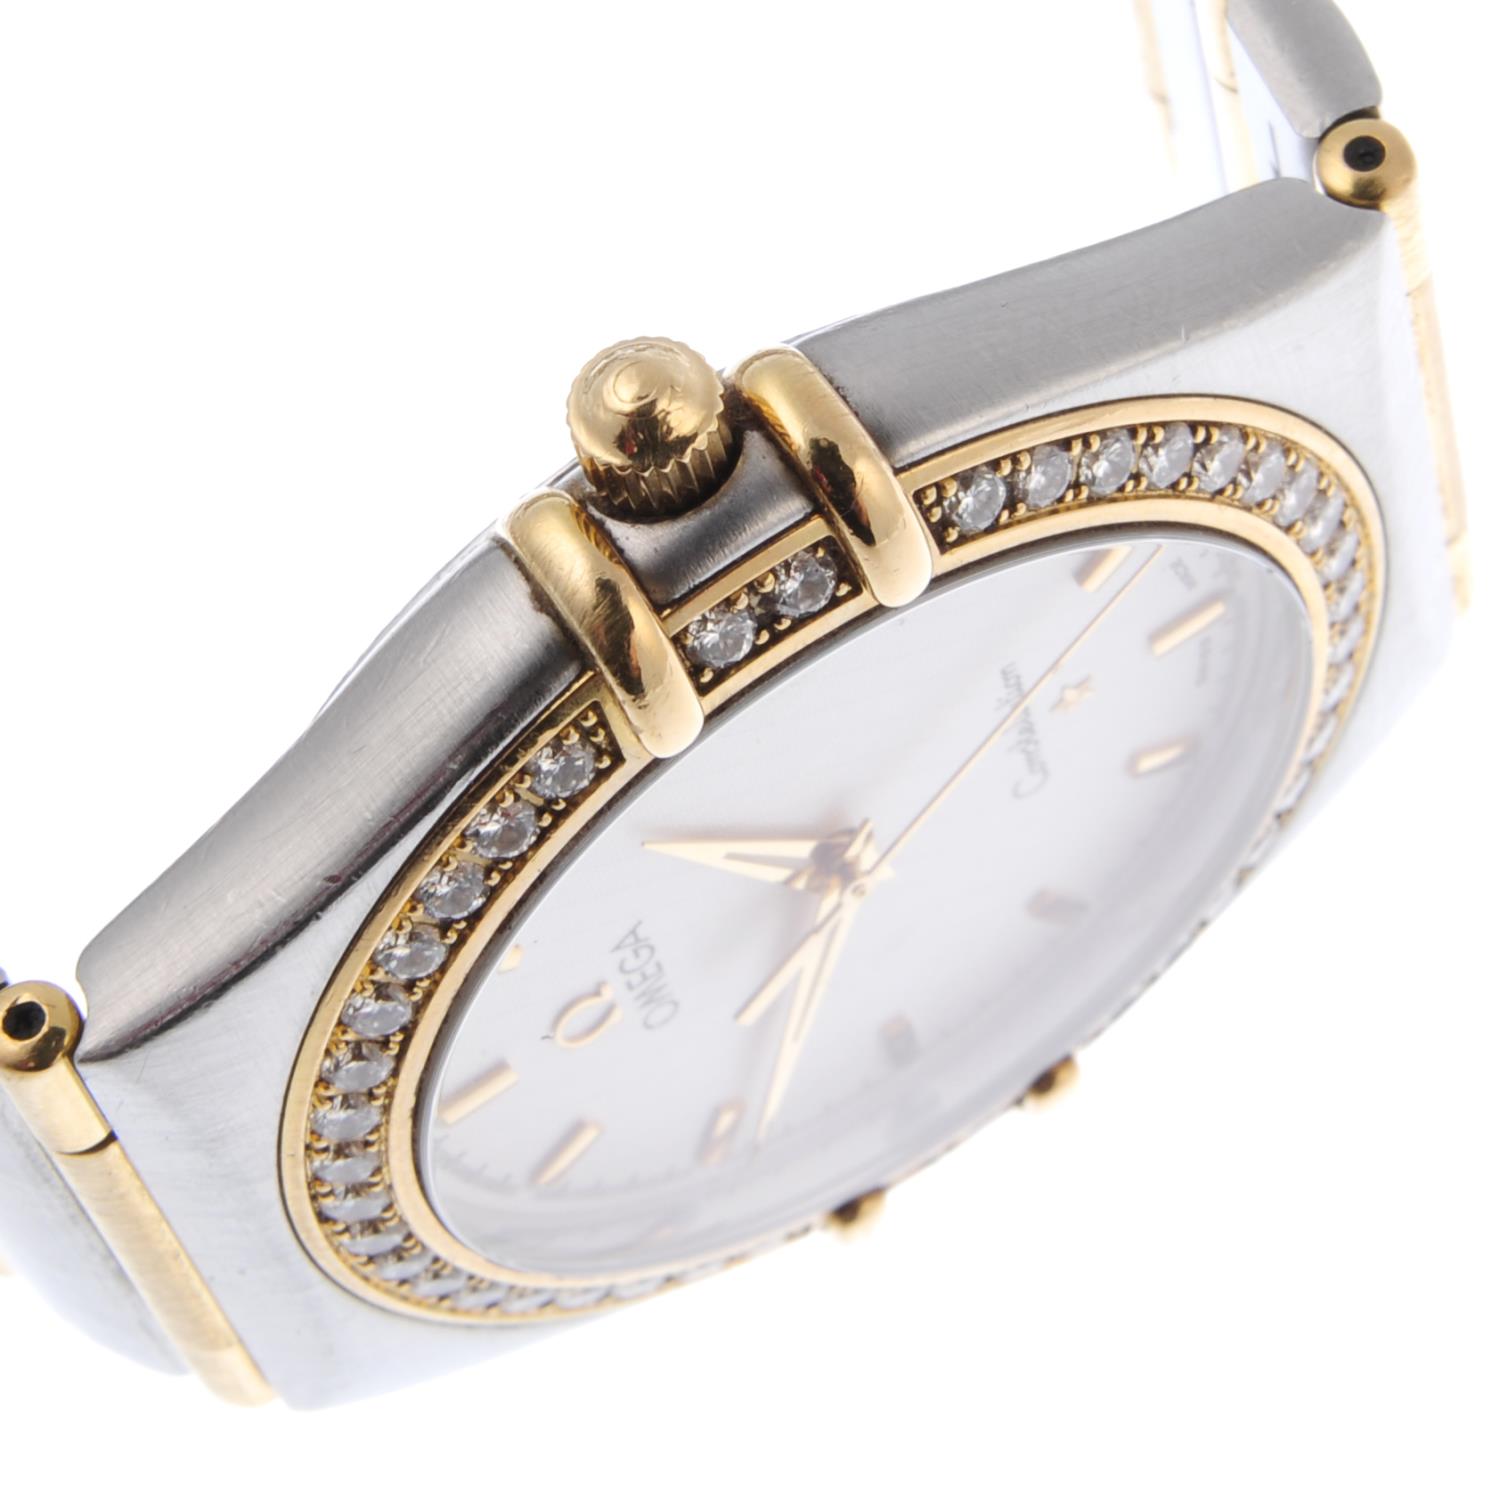 OMEGA - a gentleman's Constellation bracelet watch. - Image 3 of 4